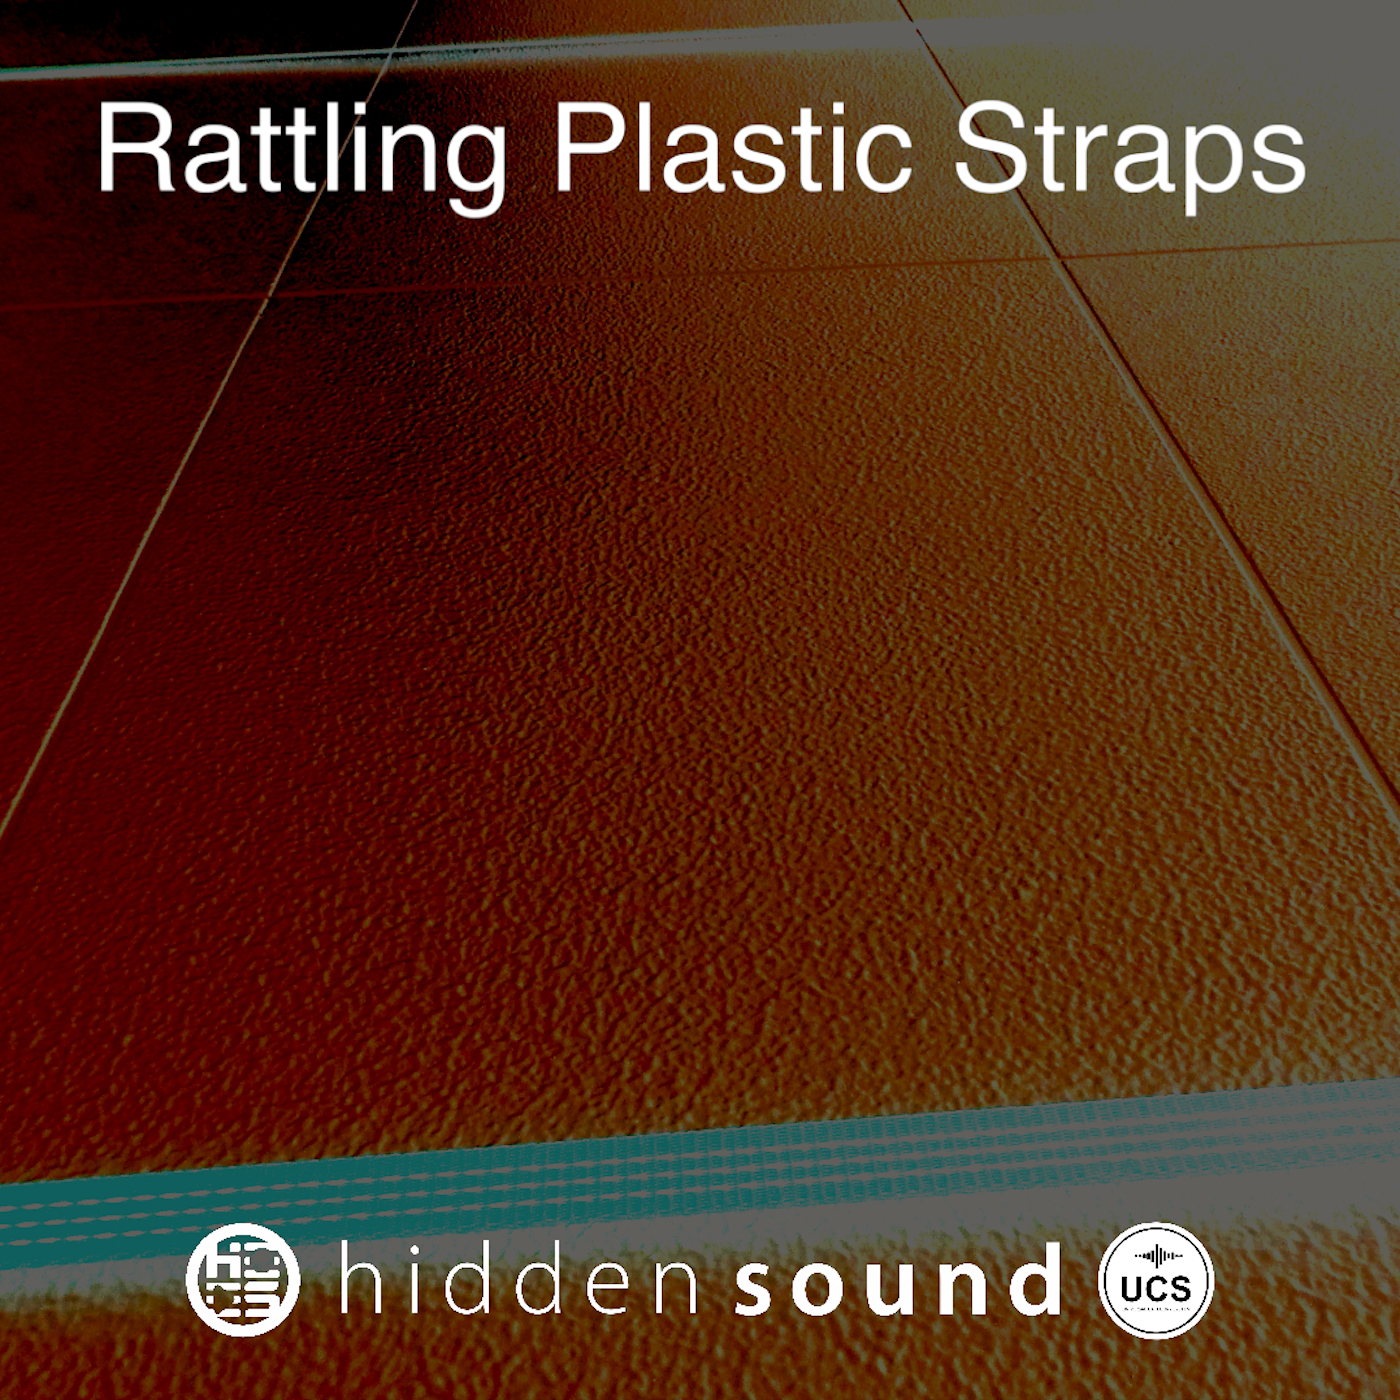 Rattling Plastic Straps